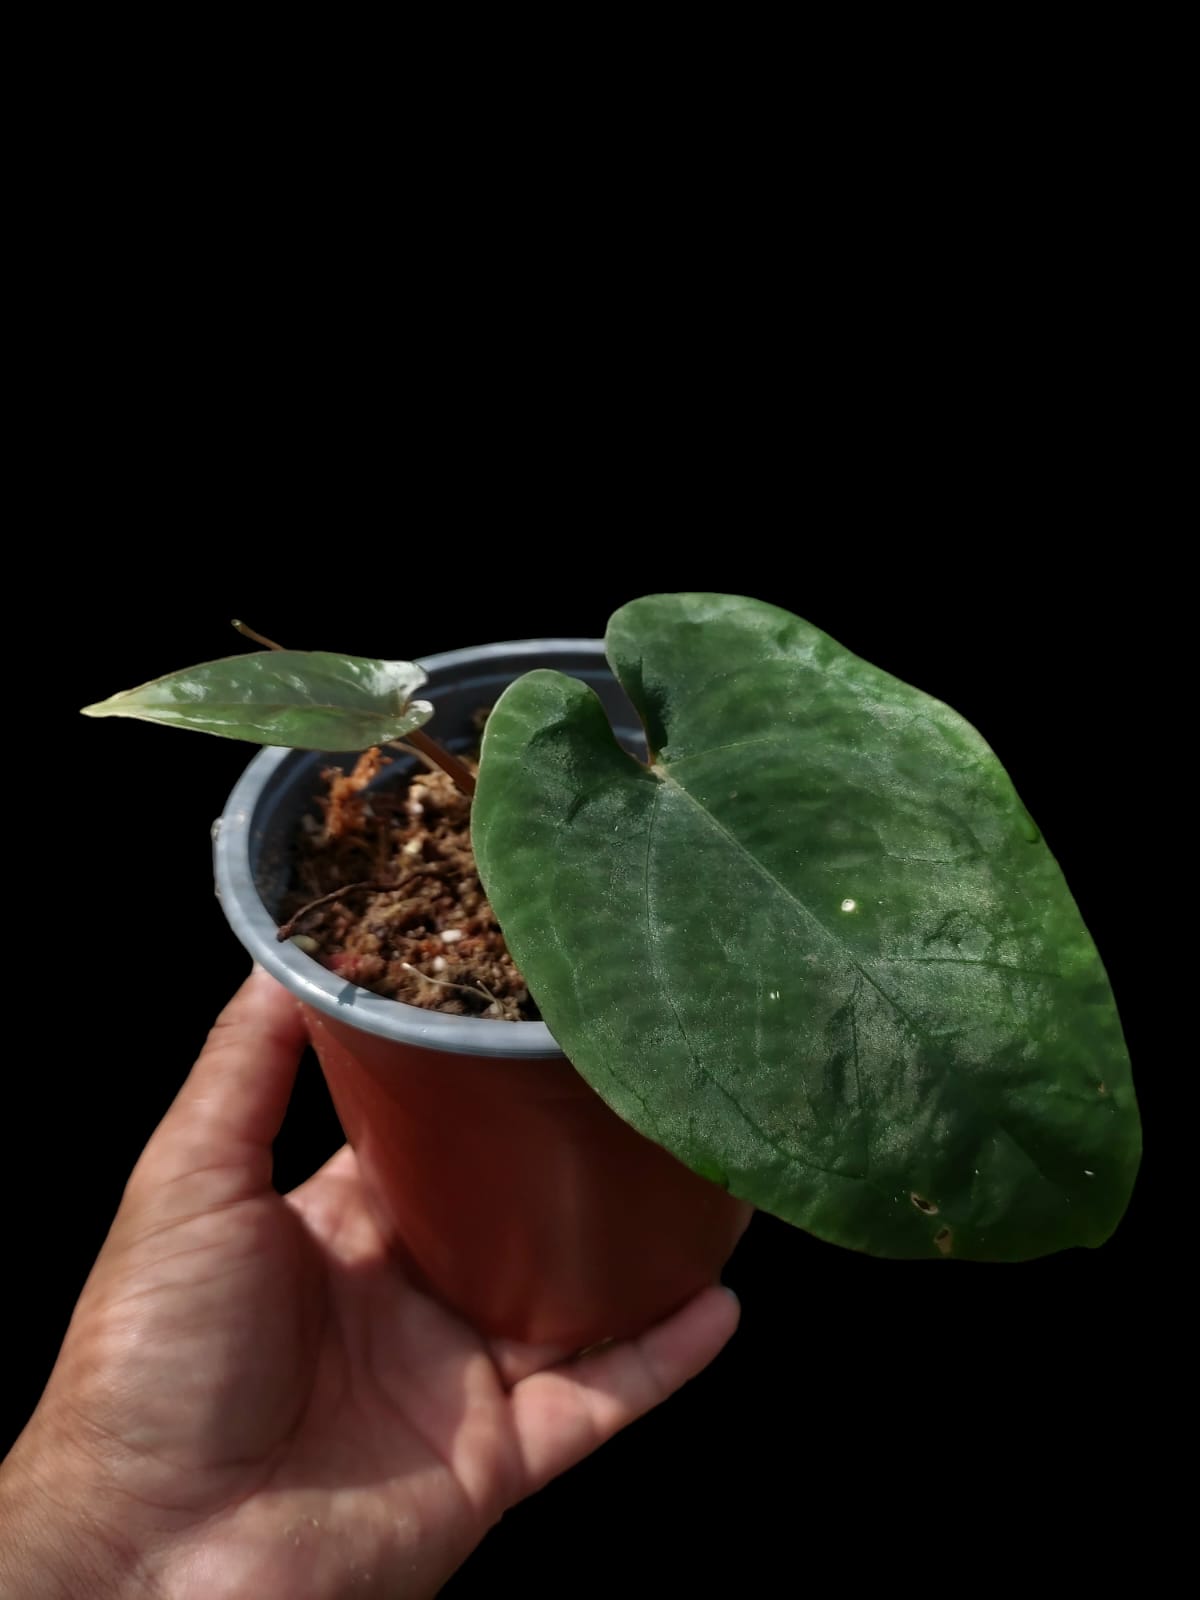 Anthurium Dressleri ecotype (EXACT PLANT)